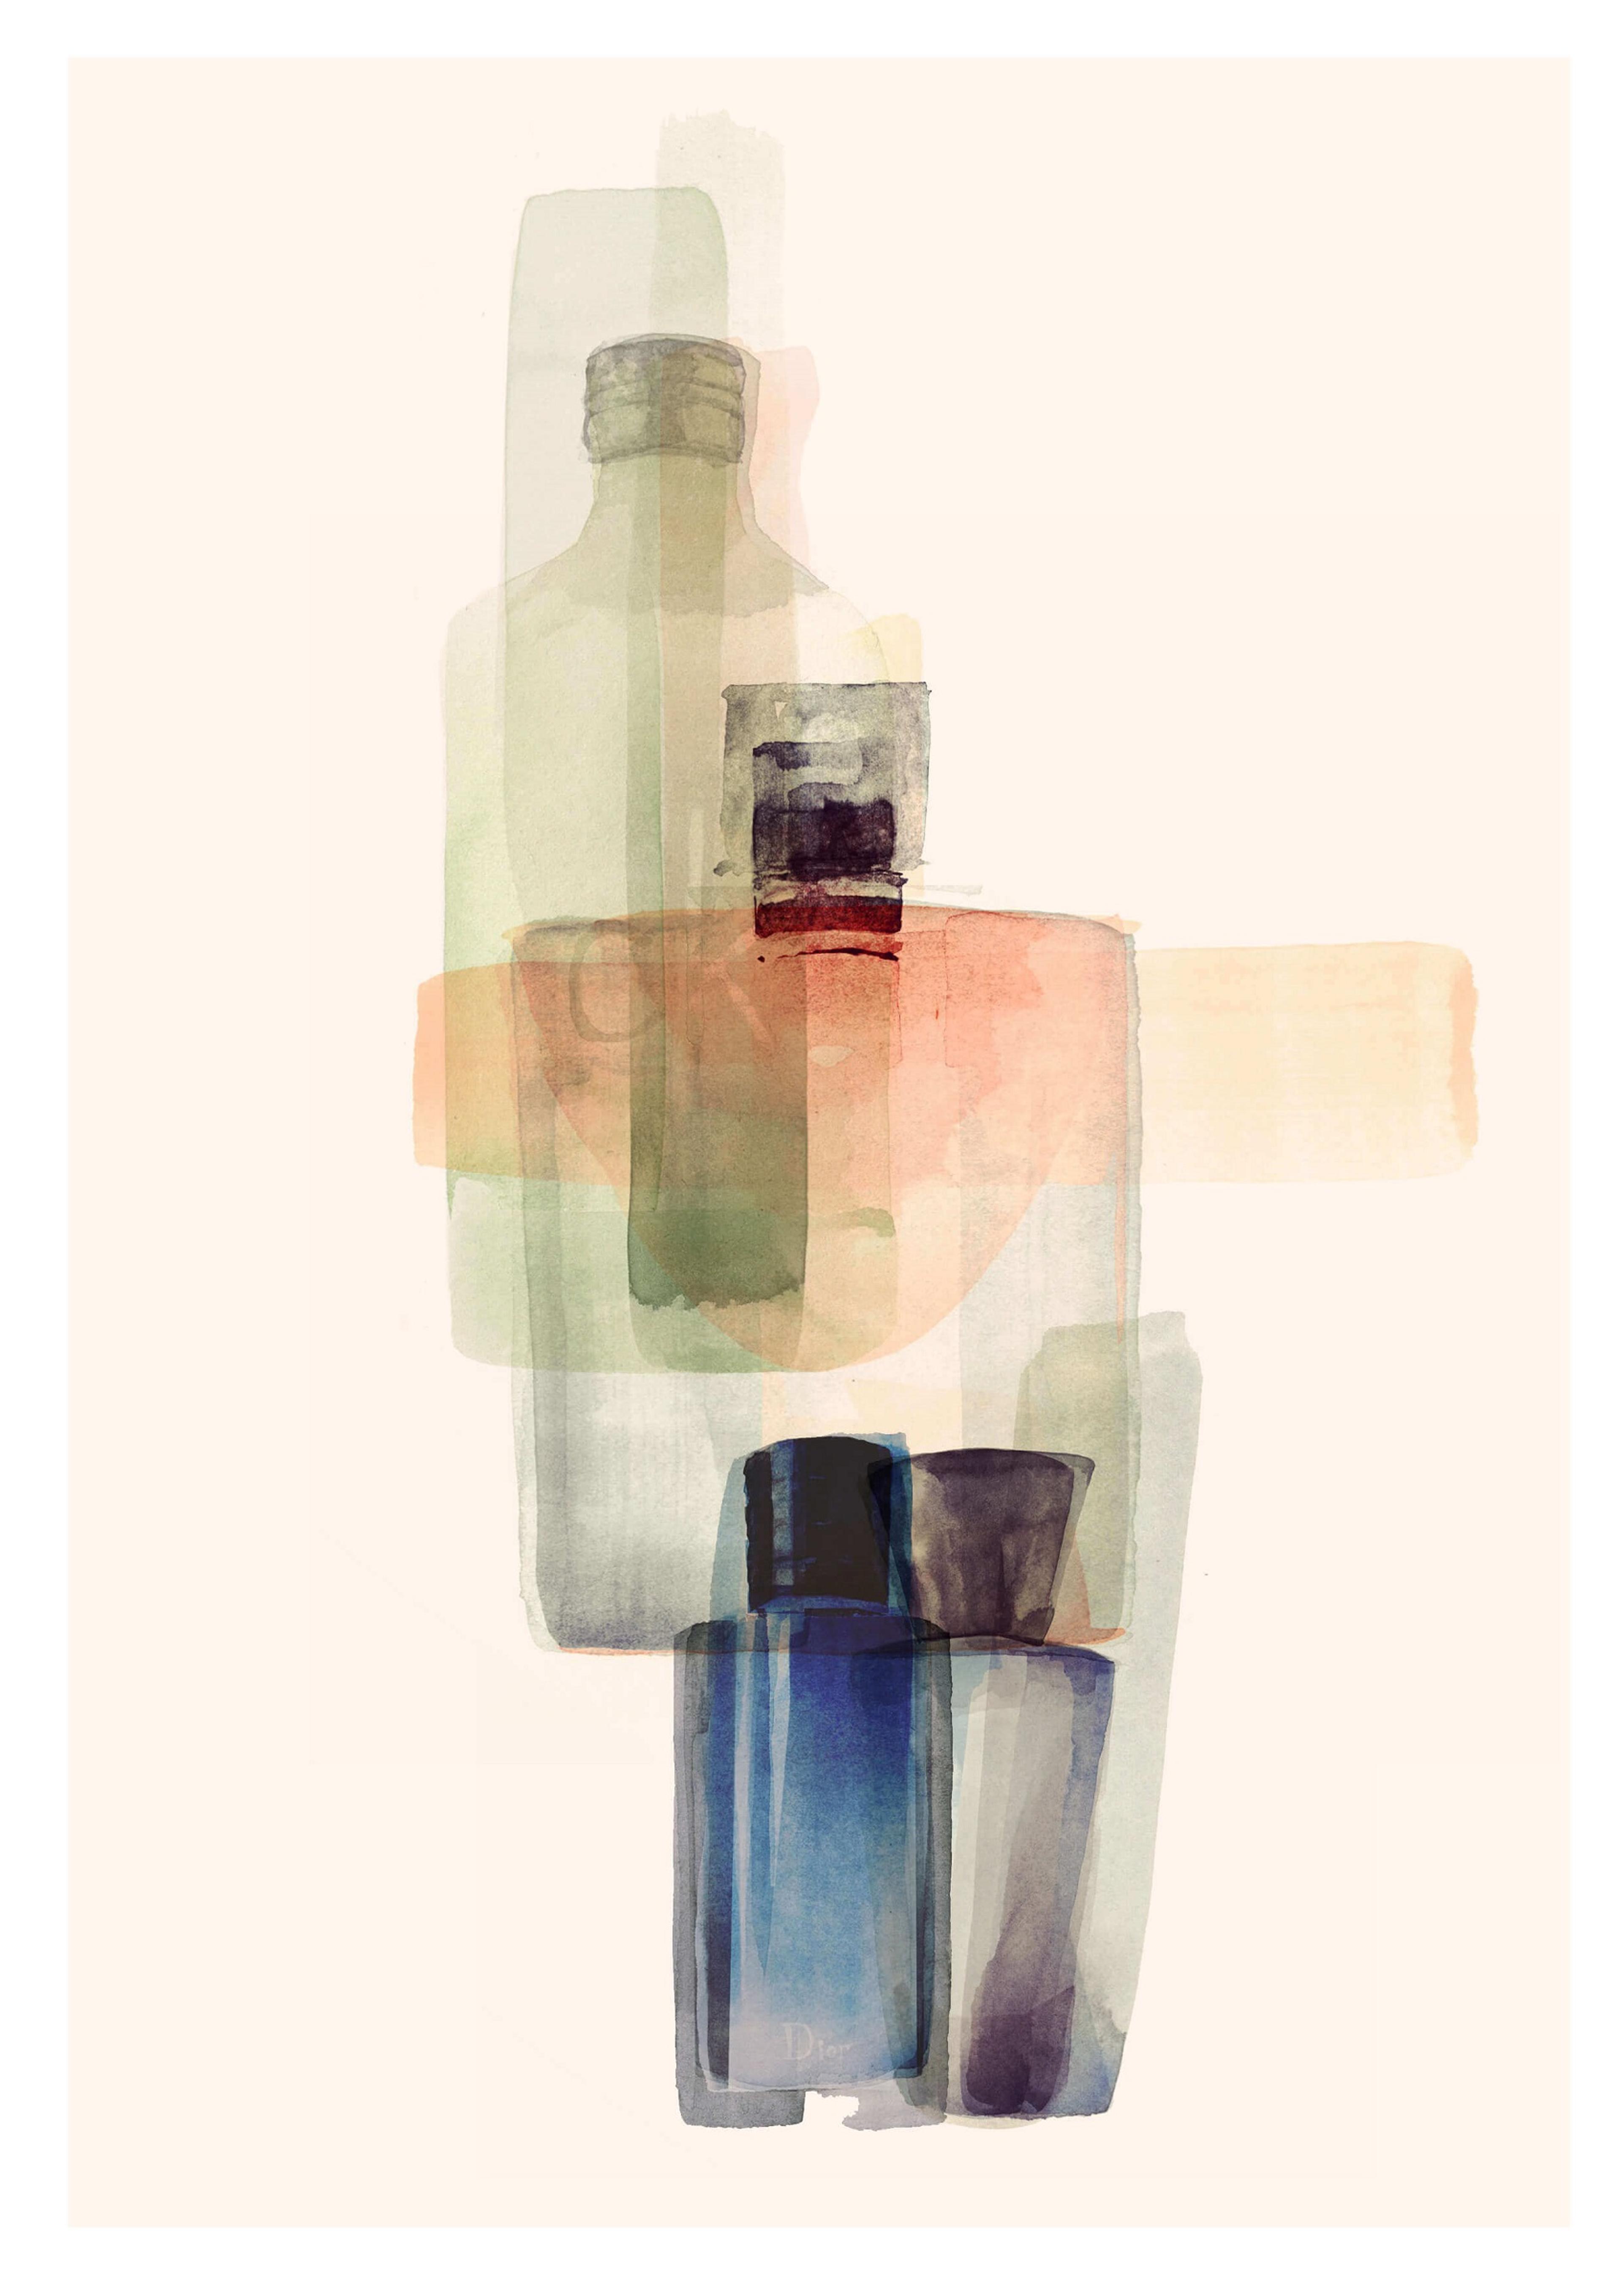 Illustration of abstract perfume bottles